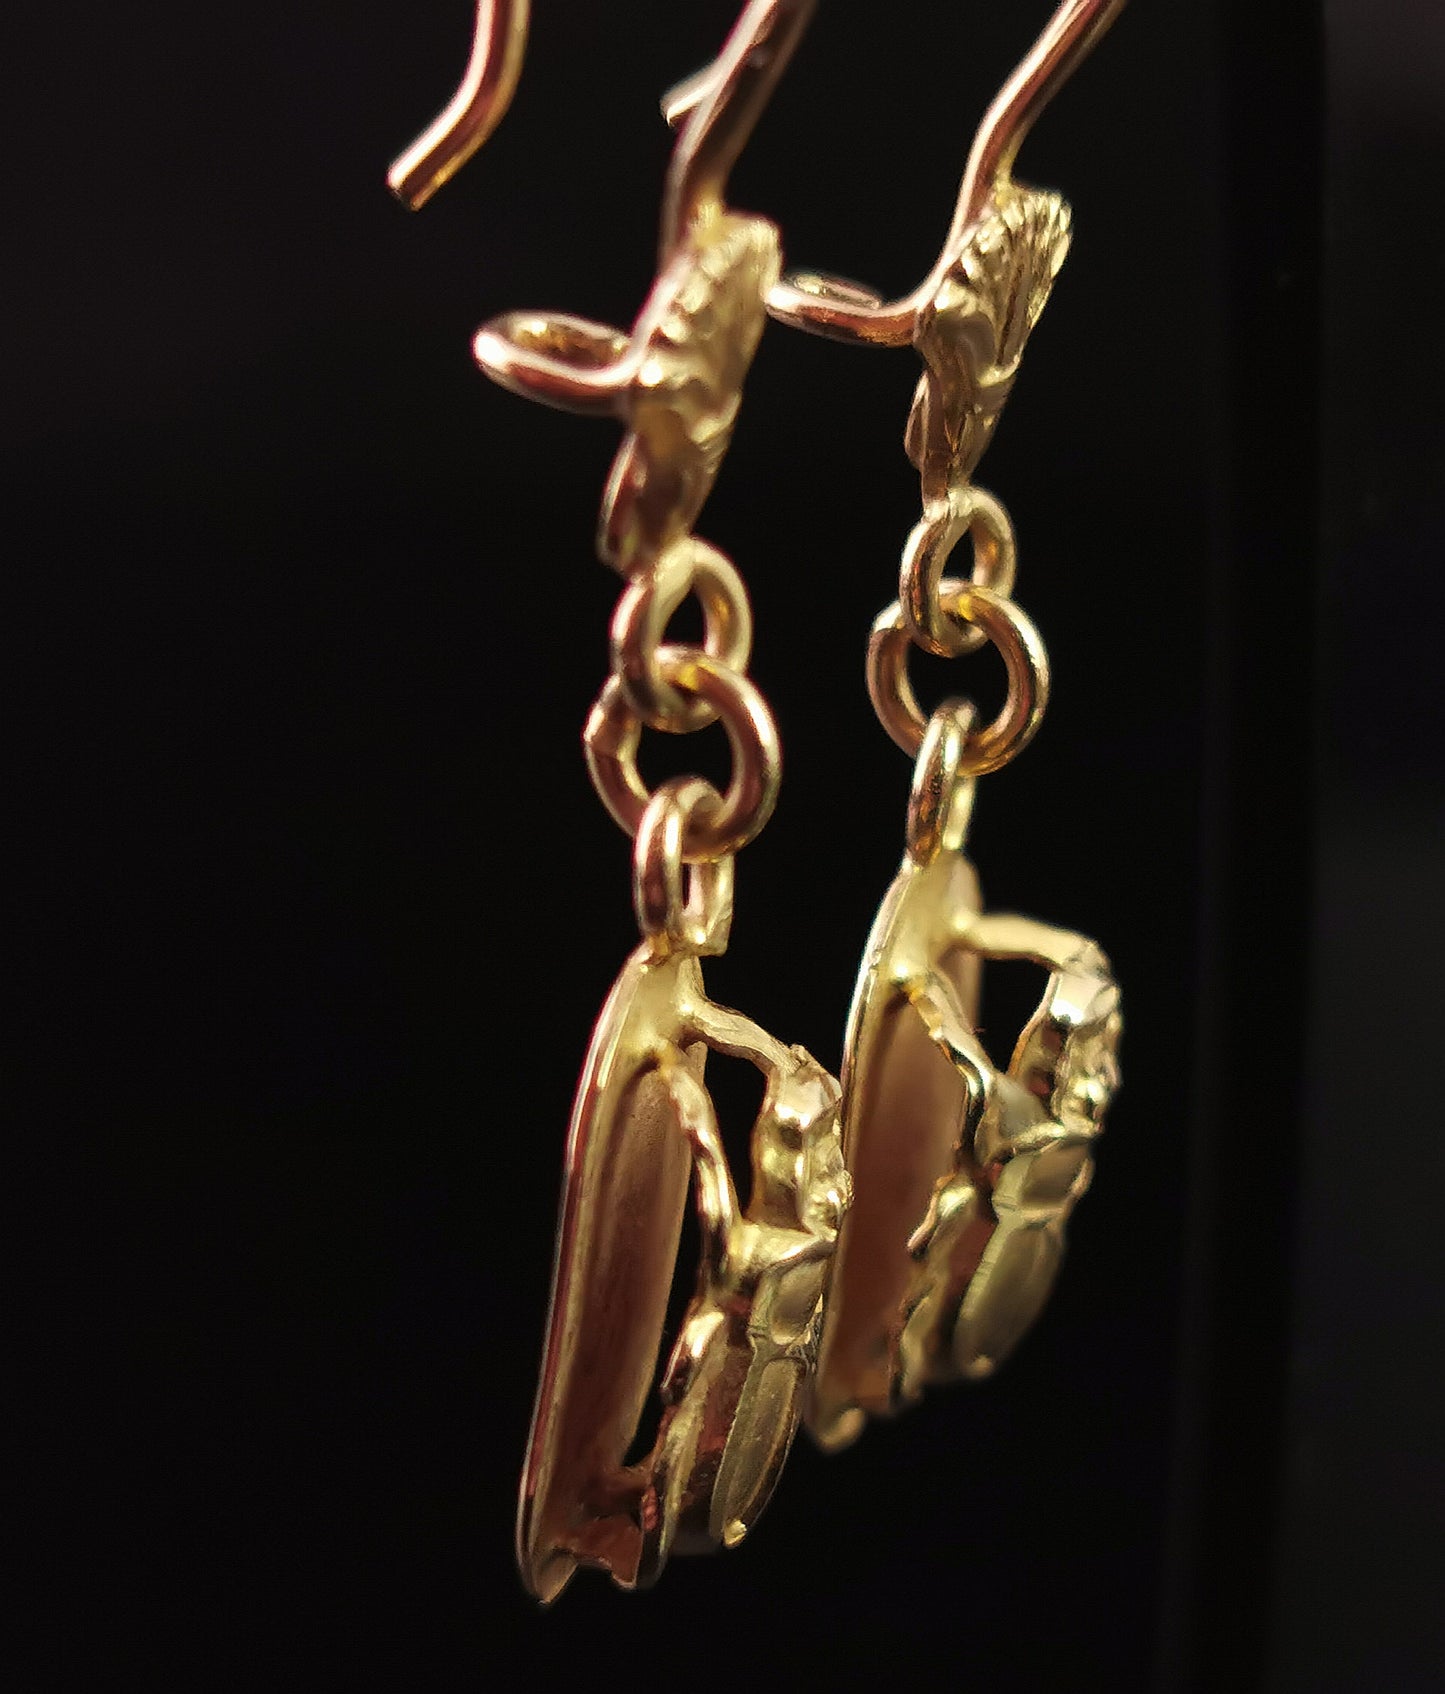 Vintage 18ct gold scarab beetle earrings, Egyptian